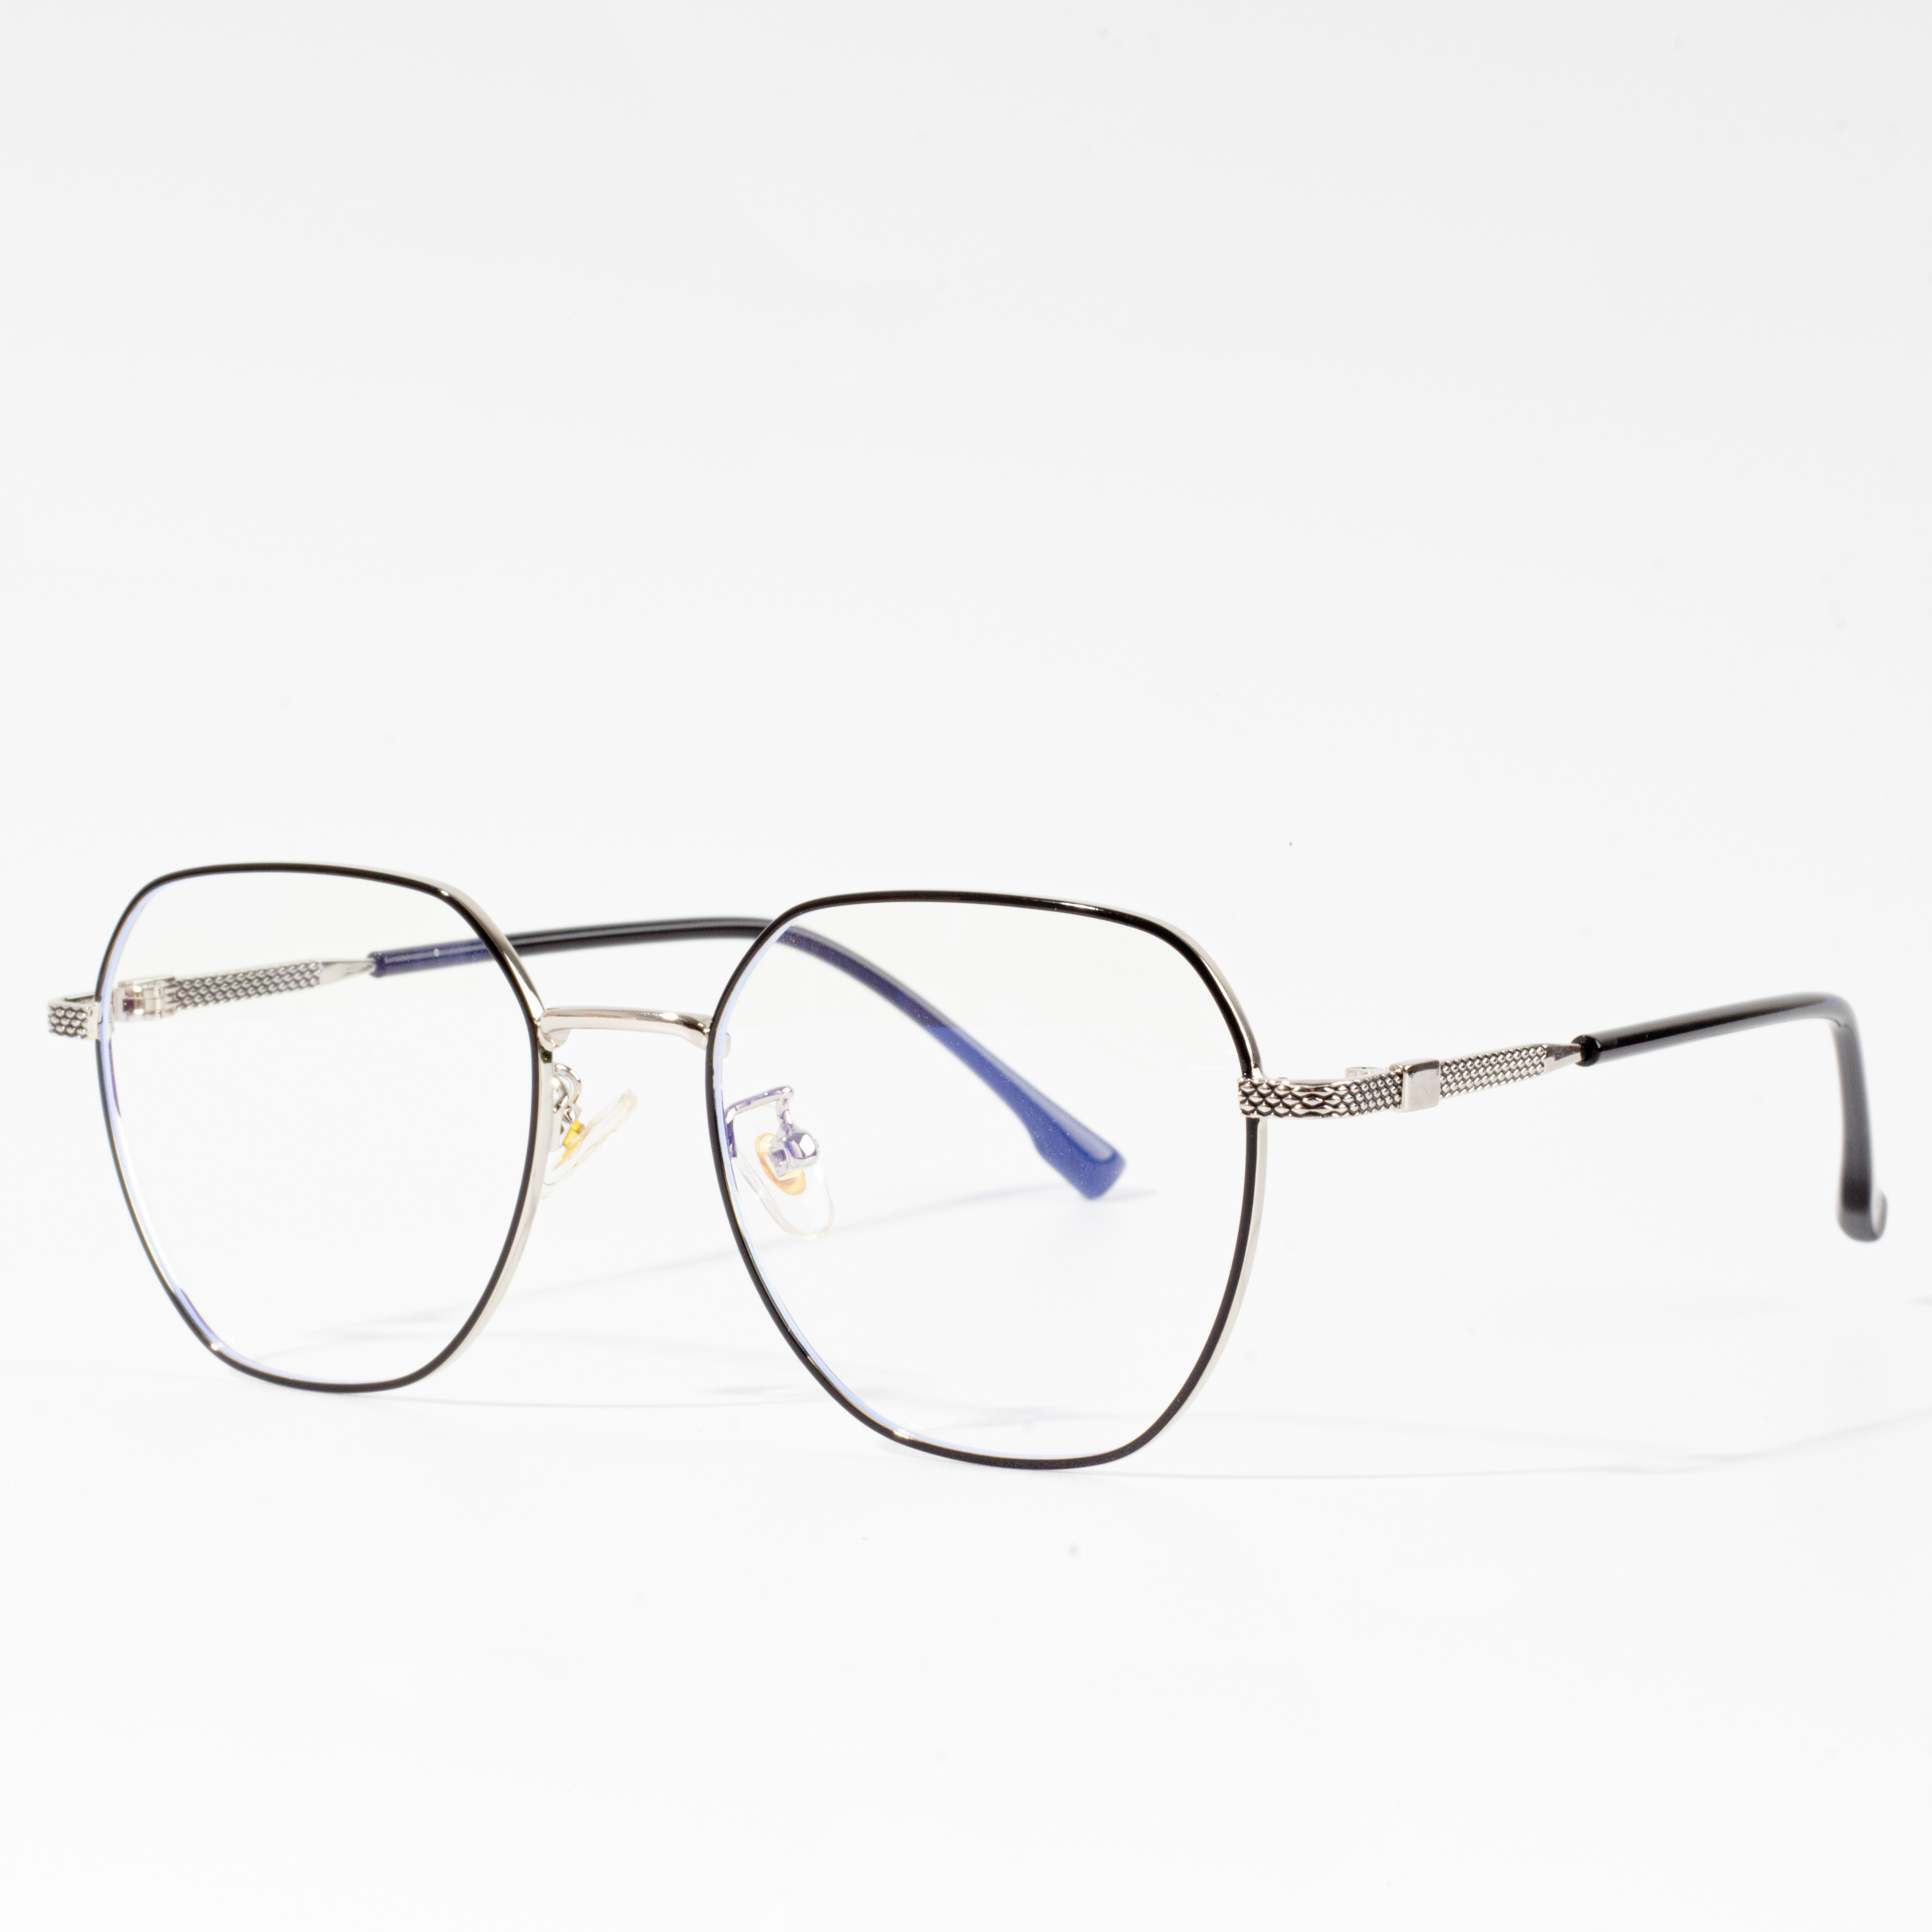 frames online eyeglasses